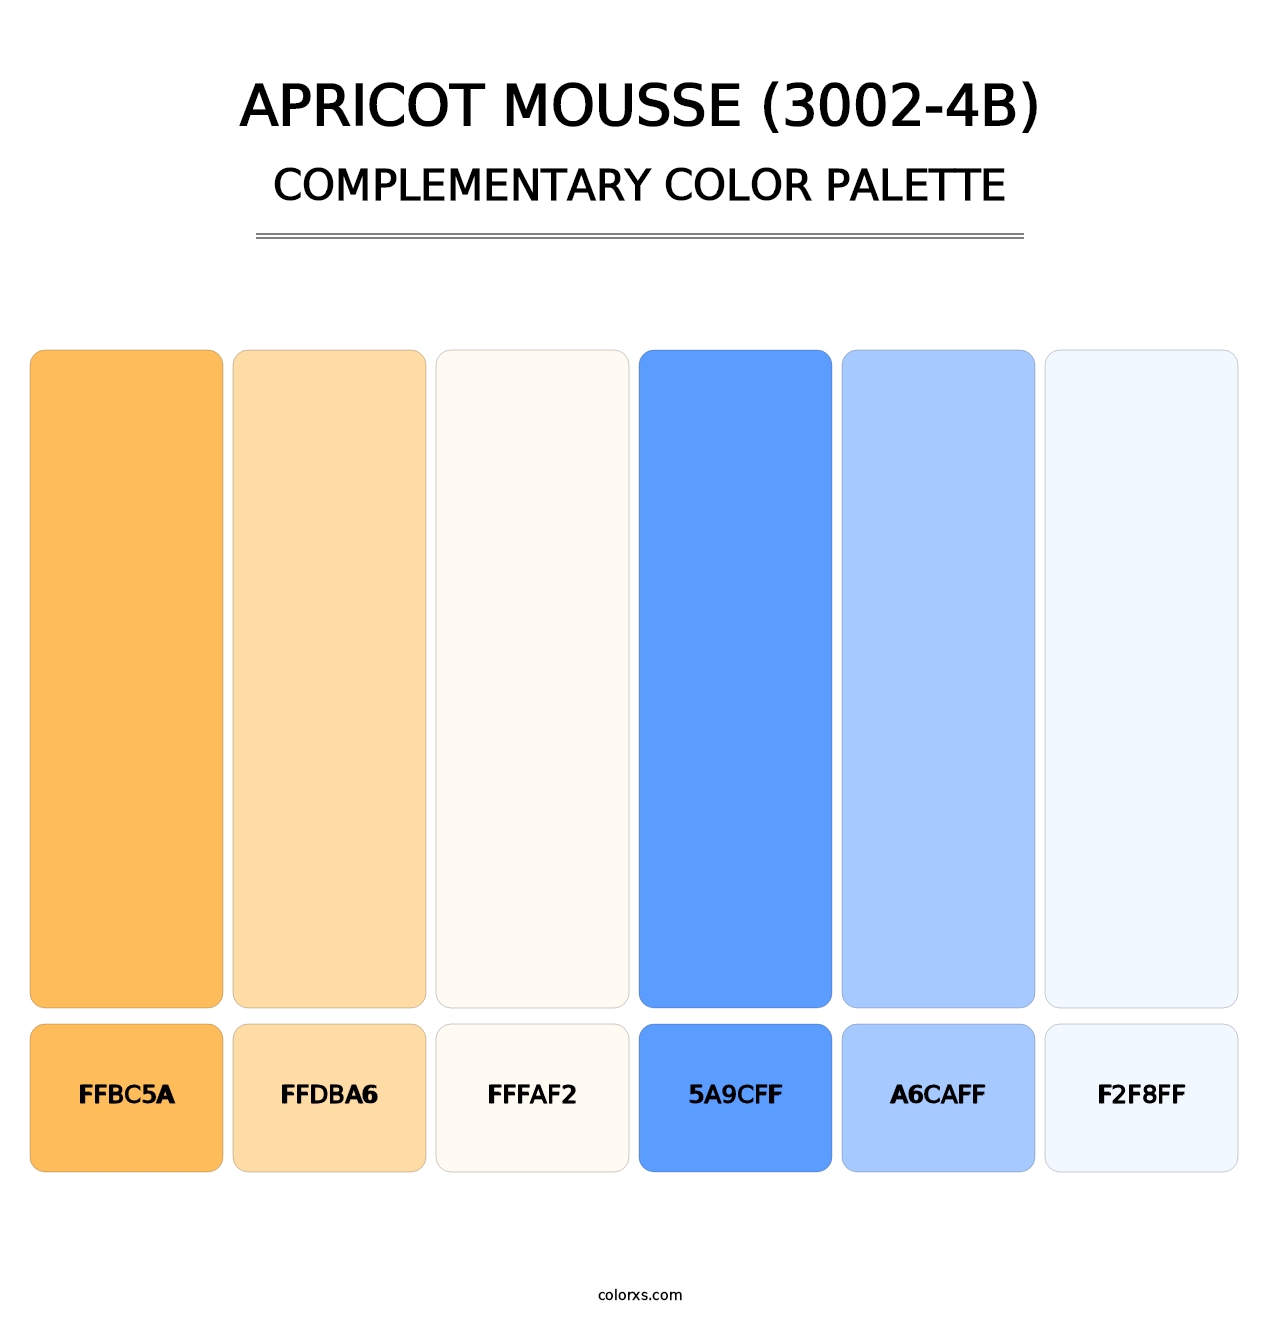 Apricot Mousse (3002-4B) - Complementary Color Palette